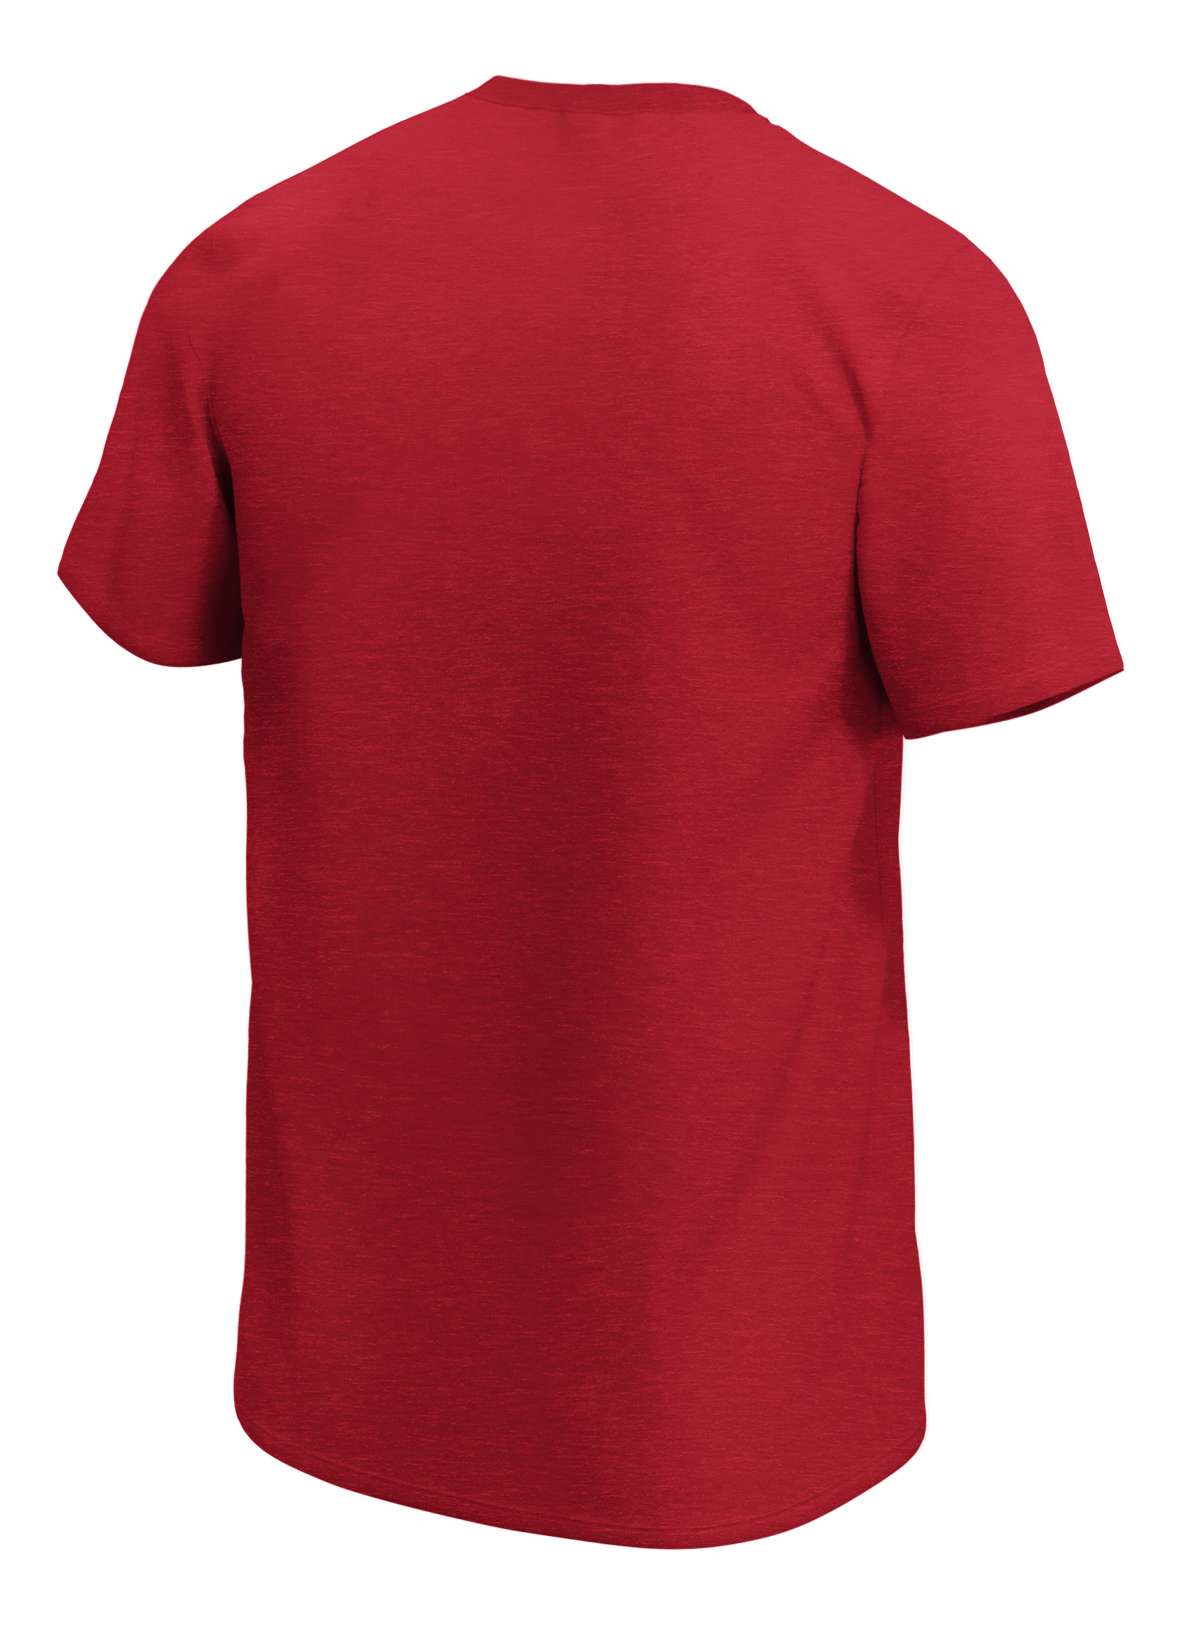 Fanatics - NFL Tampa Bay Buccaneers Mono Premium Graphic T-Shirt - Rot